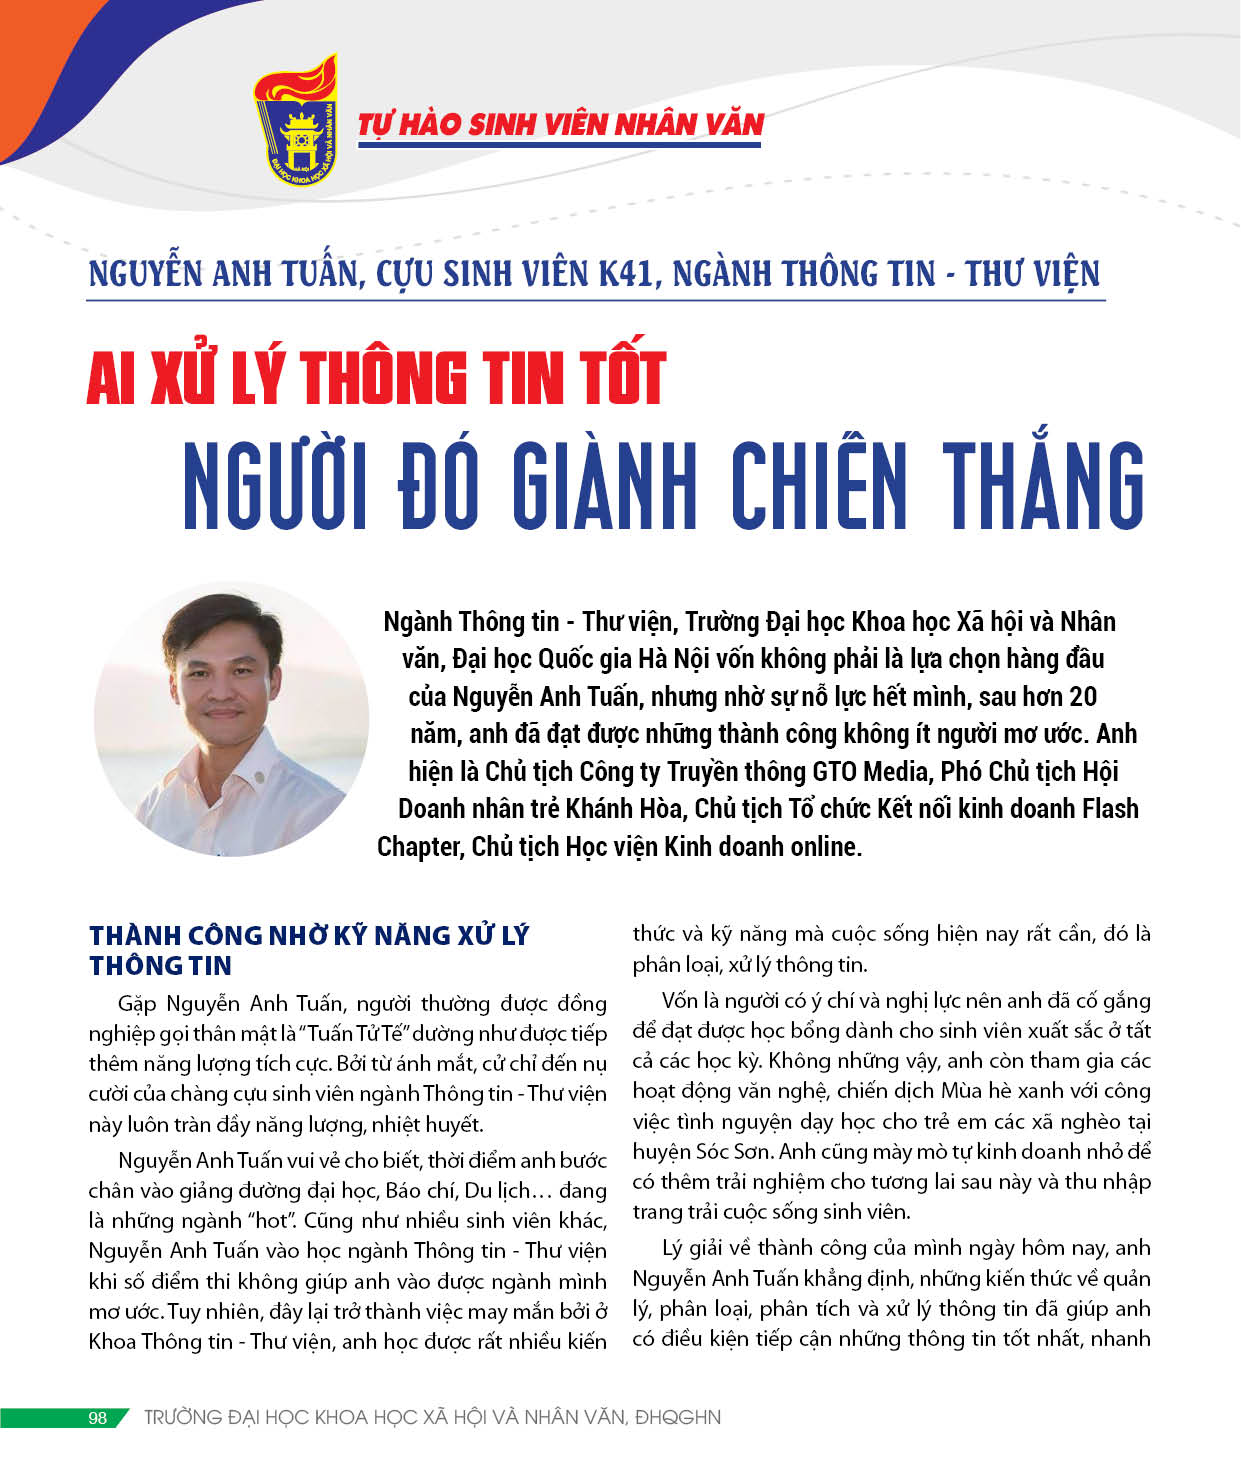 Thong tin thu vien (2)